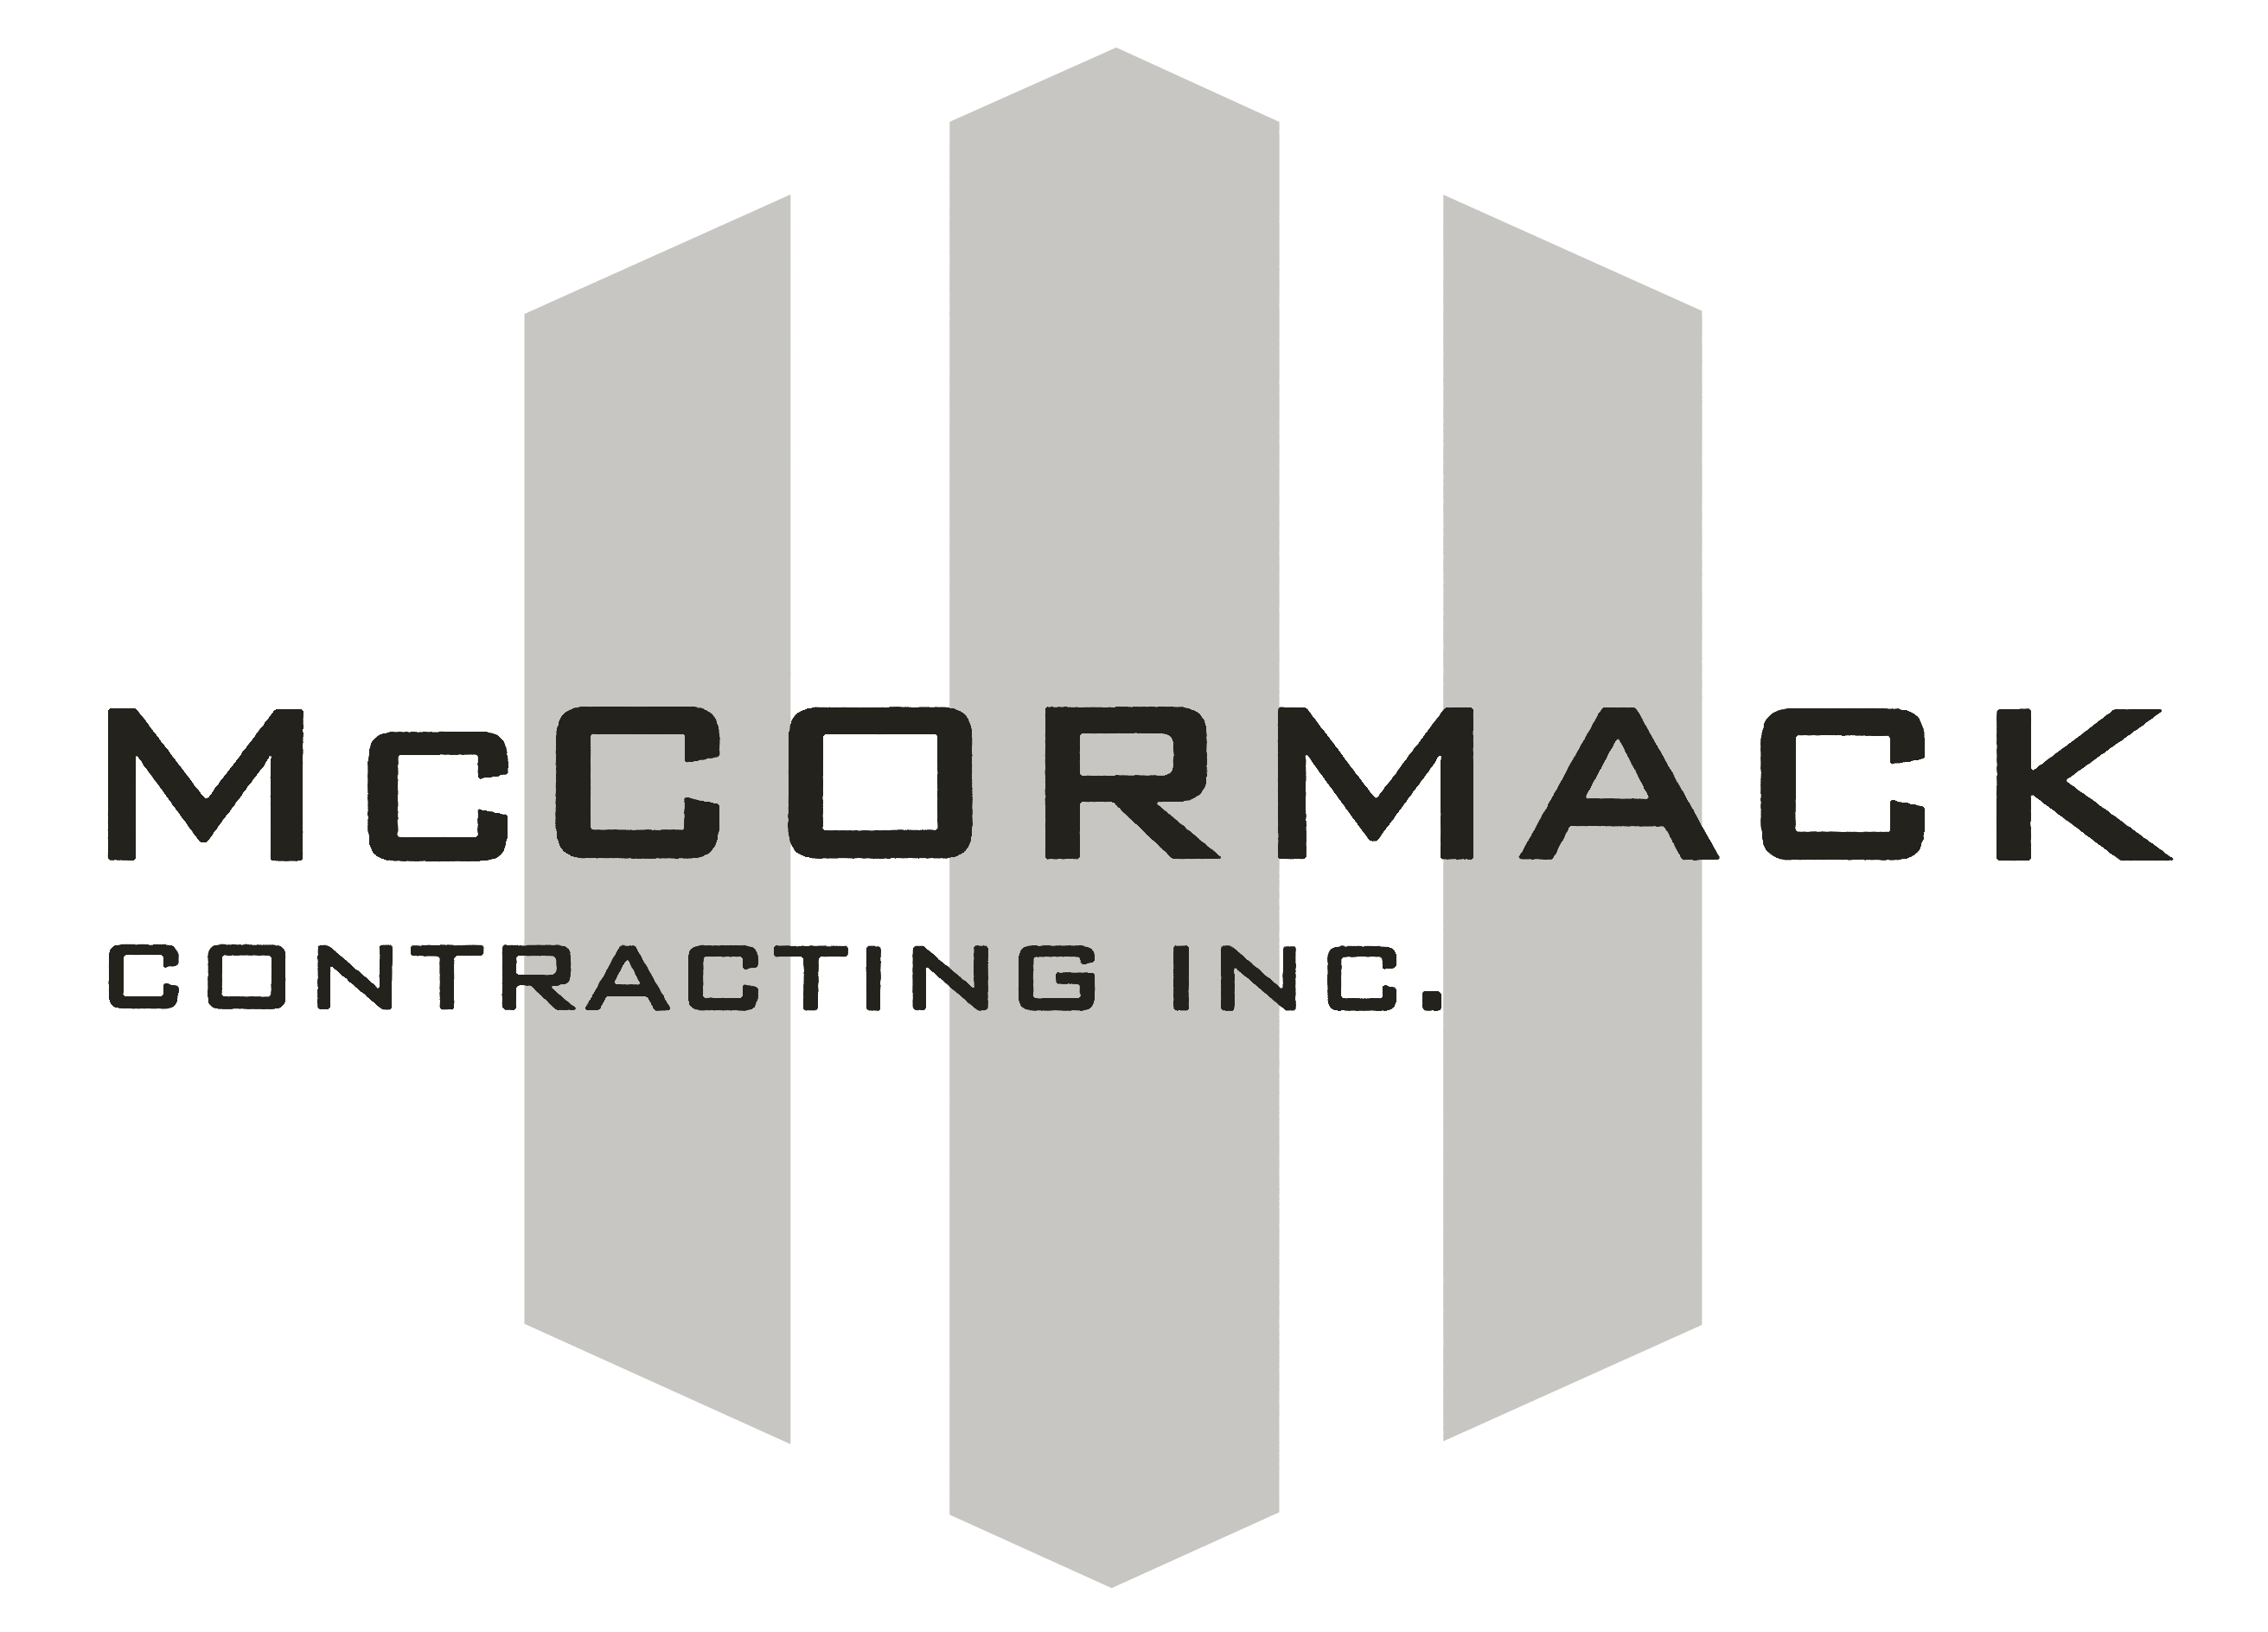 McCormack Contracting Inc